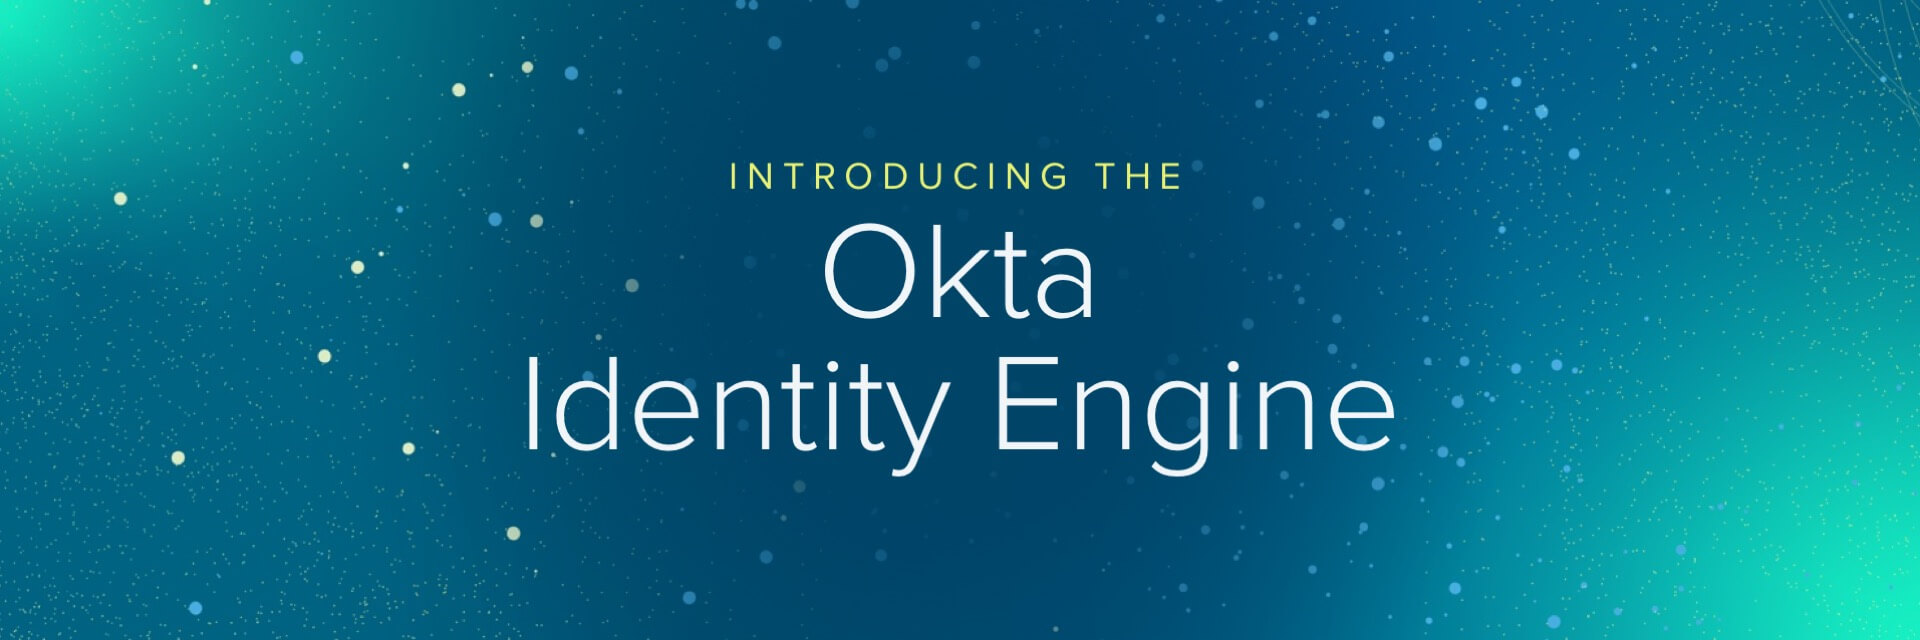 Okta Identity Engine Blog post